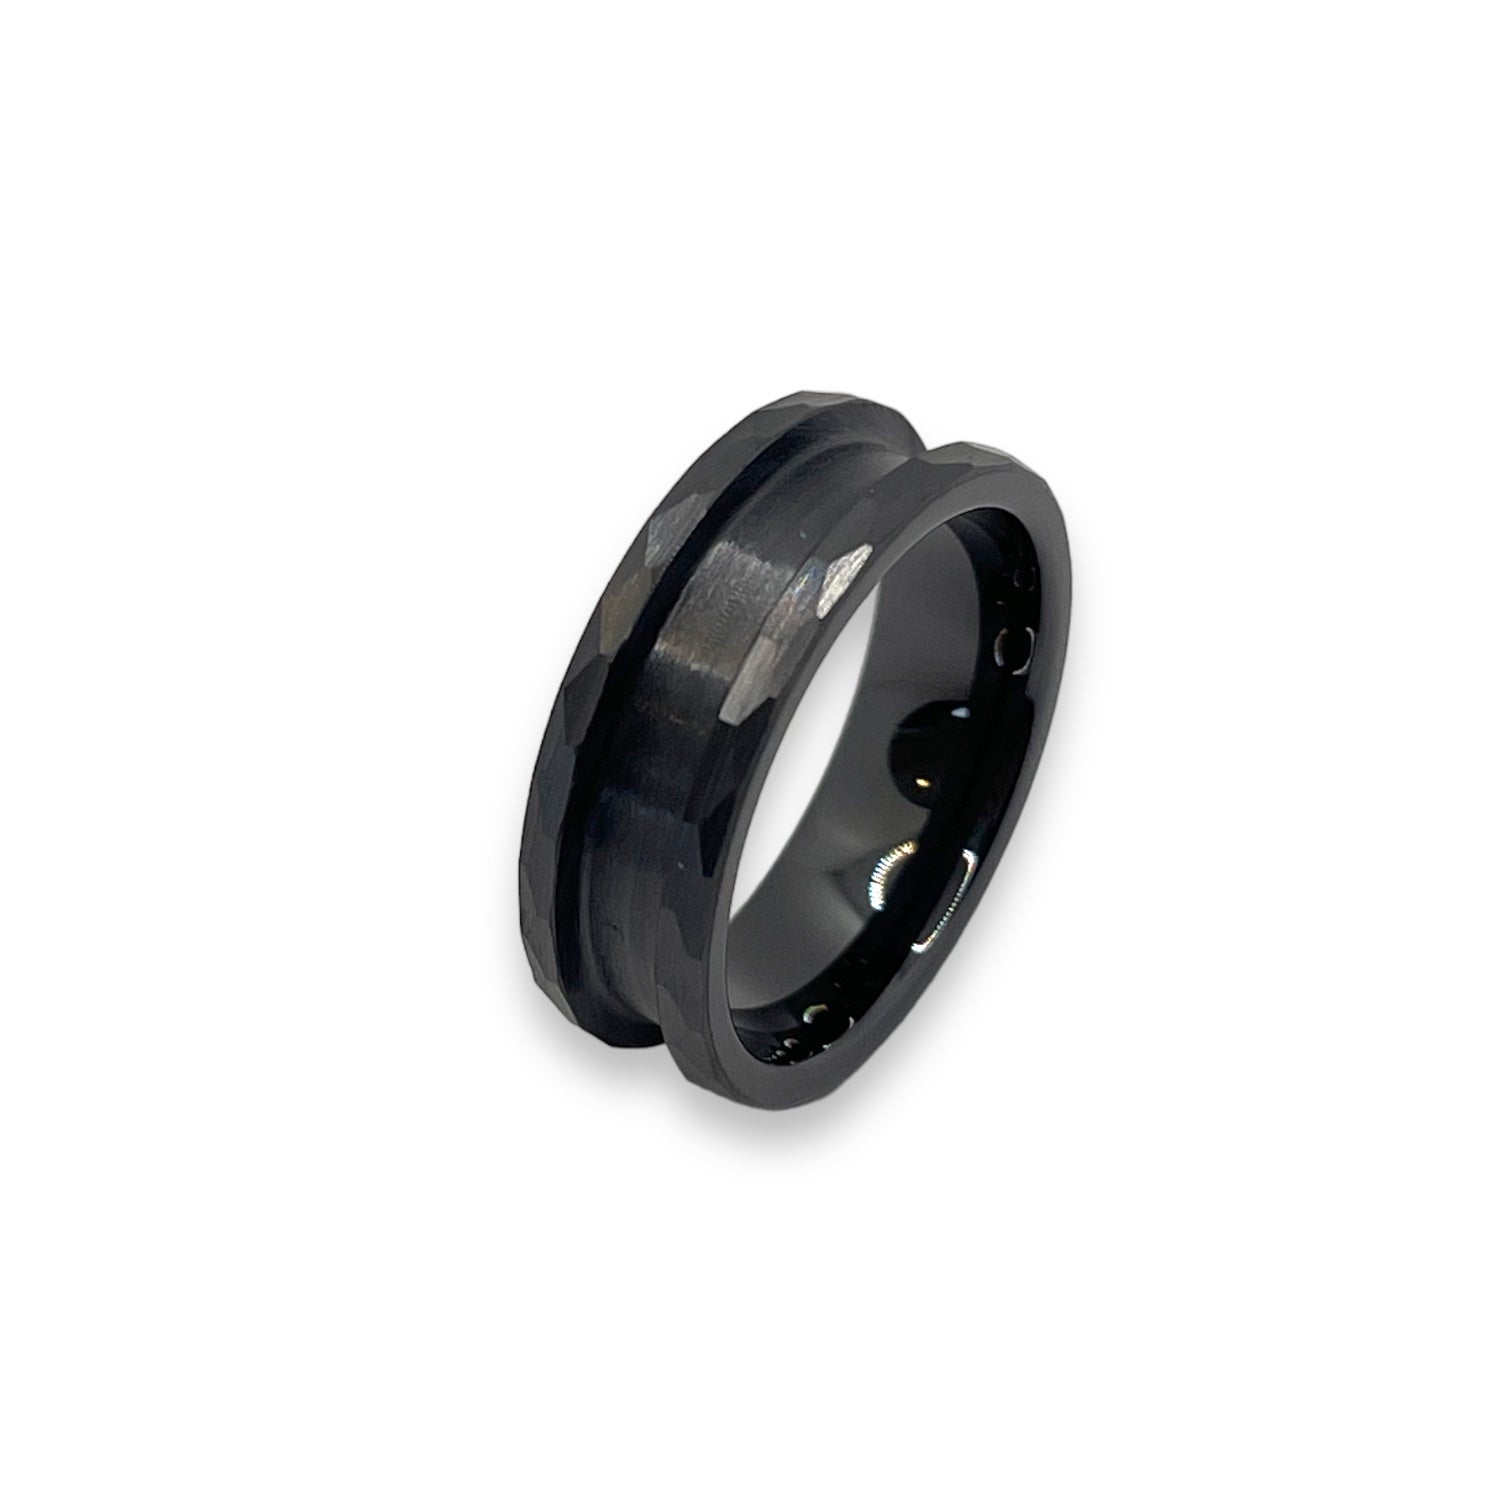 Hammered Black Ceramic ring core